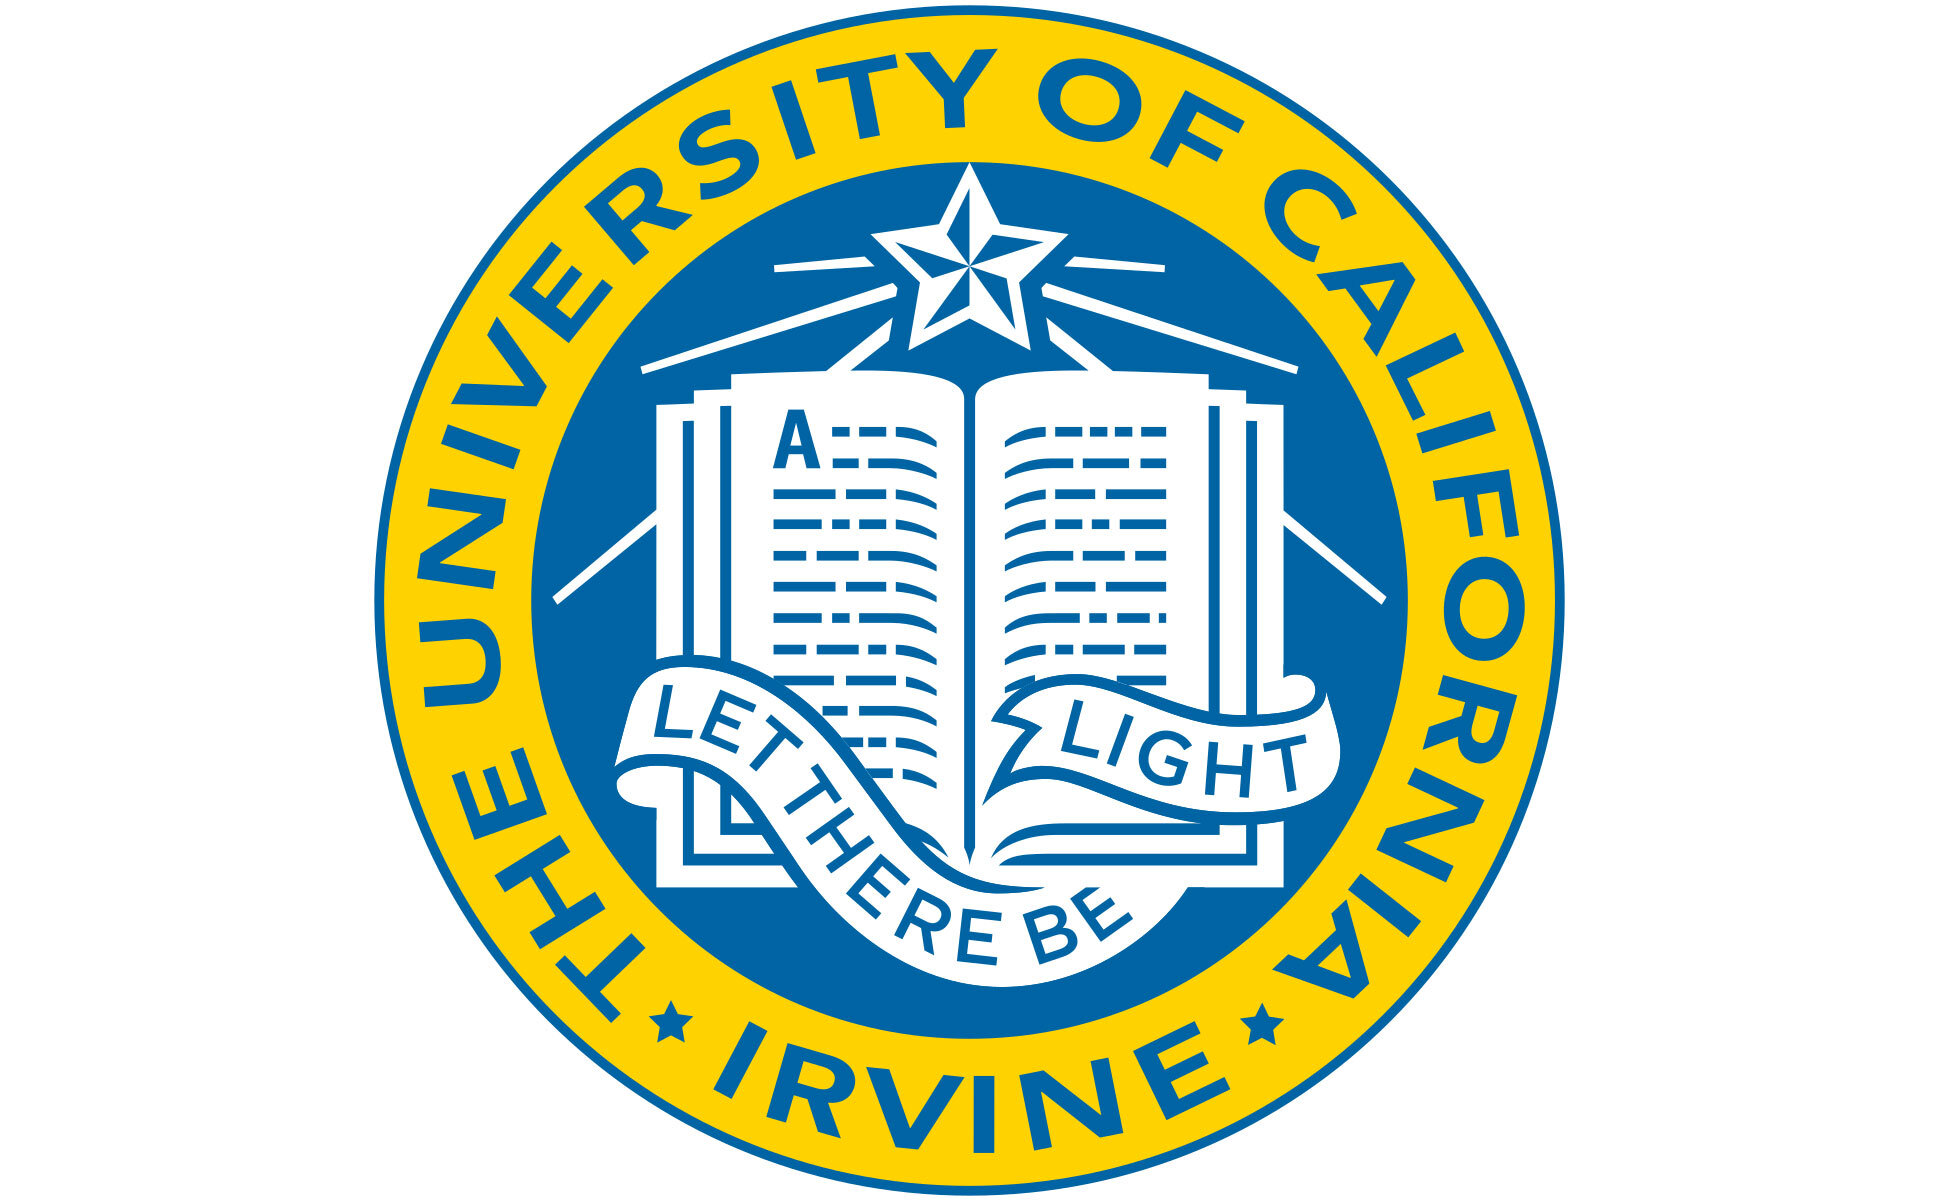 The University of California Irvine